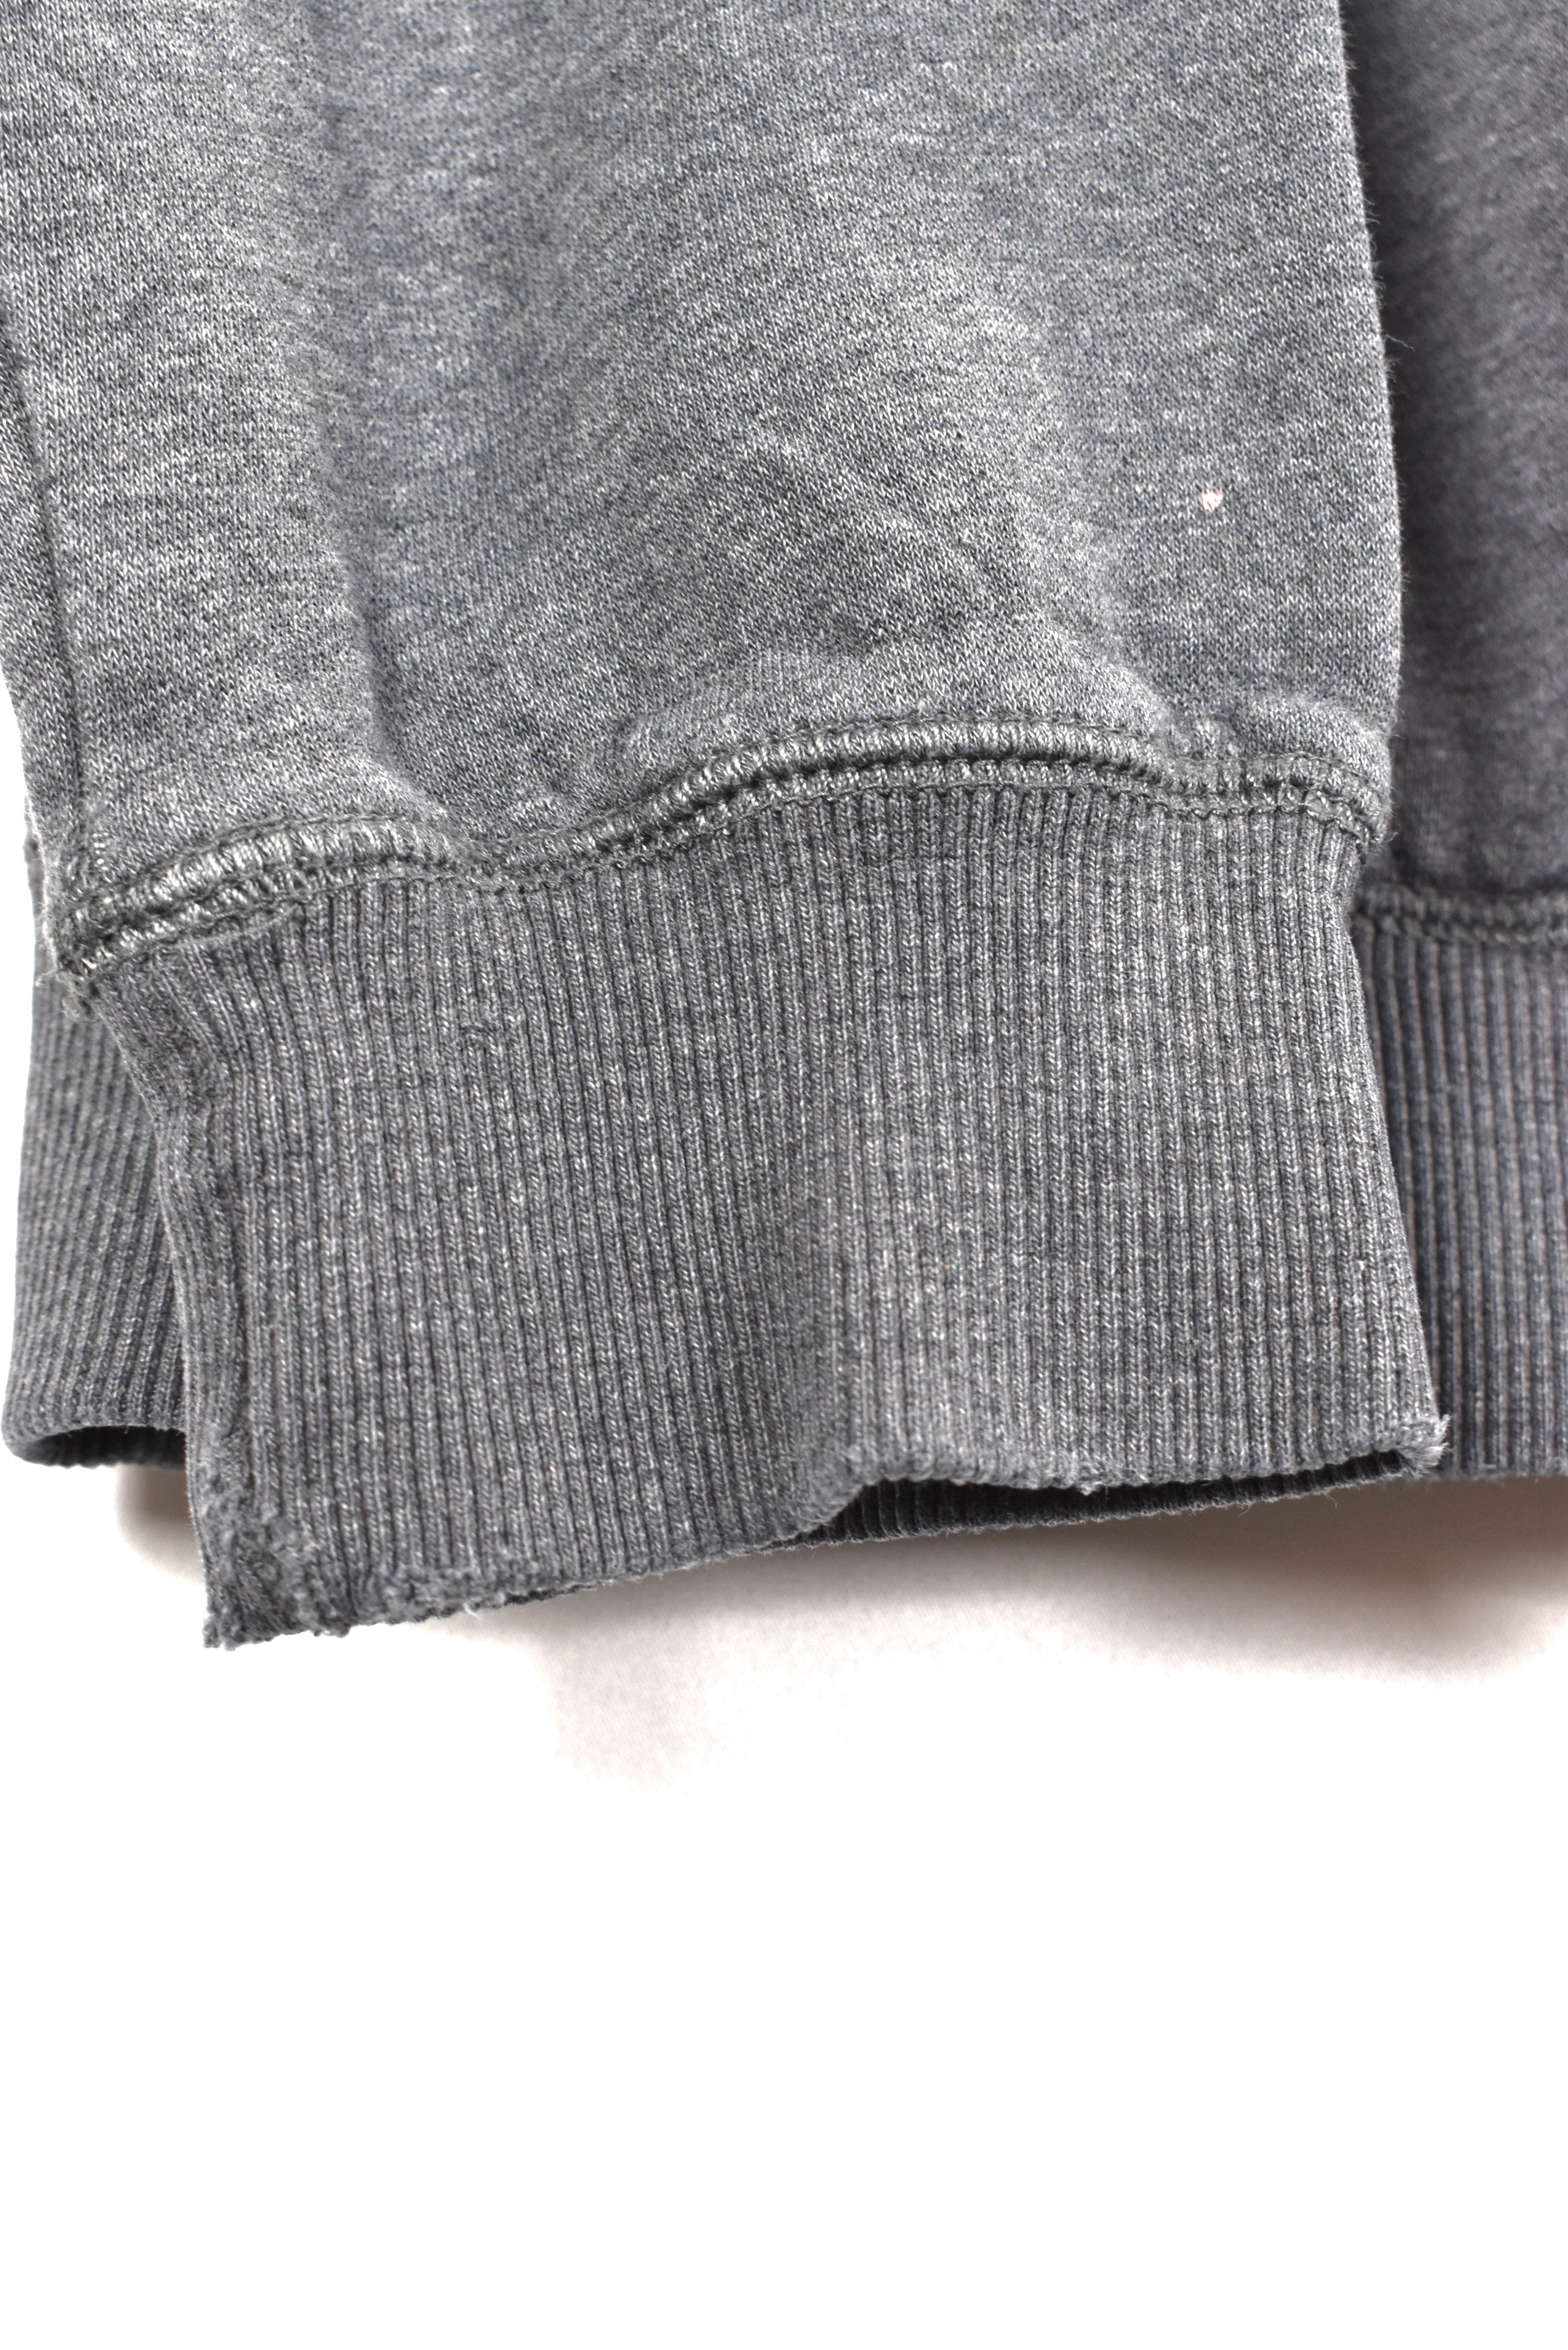 Vintage Nike jacket, grey embroidered collared sweatshirt - AU M NIKE